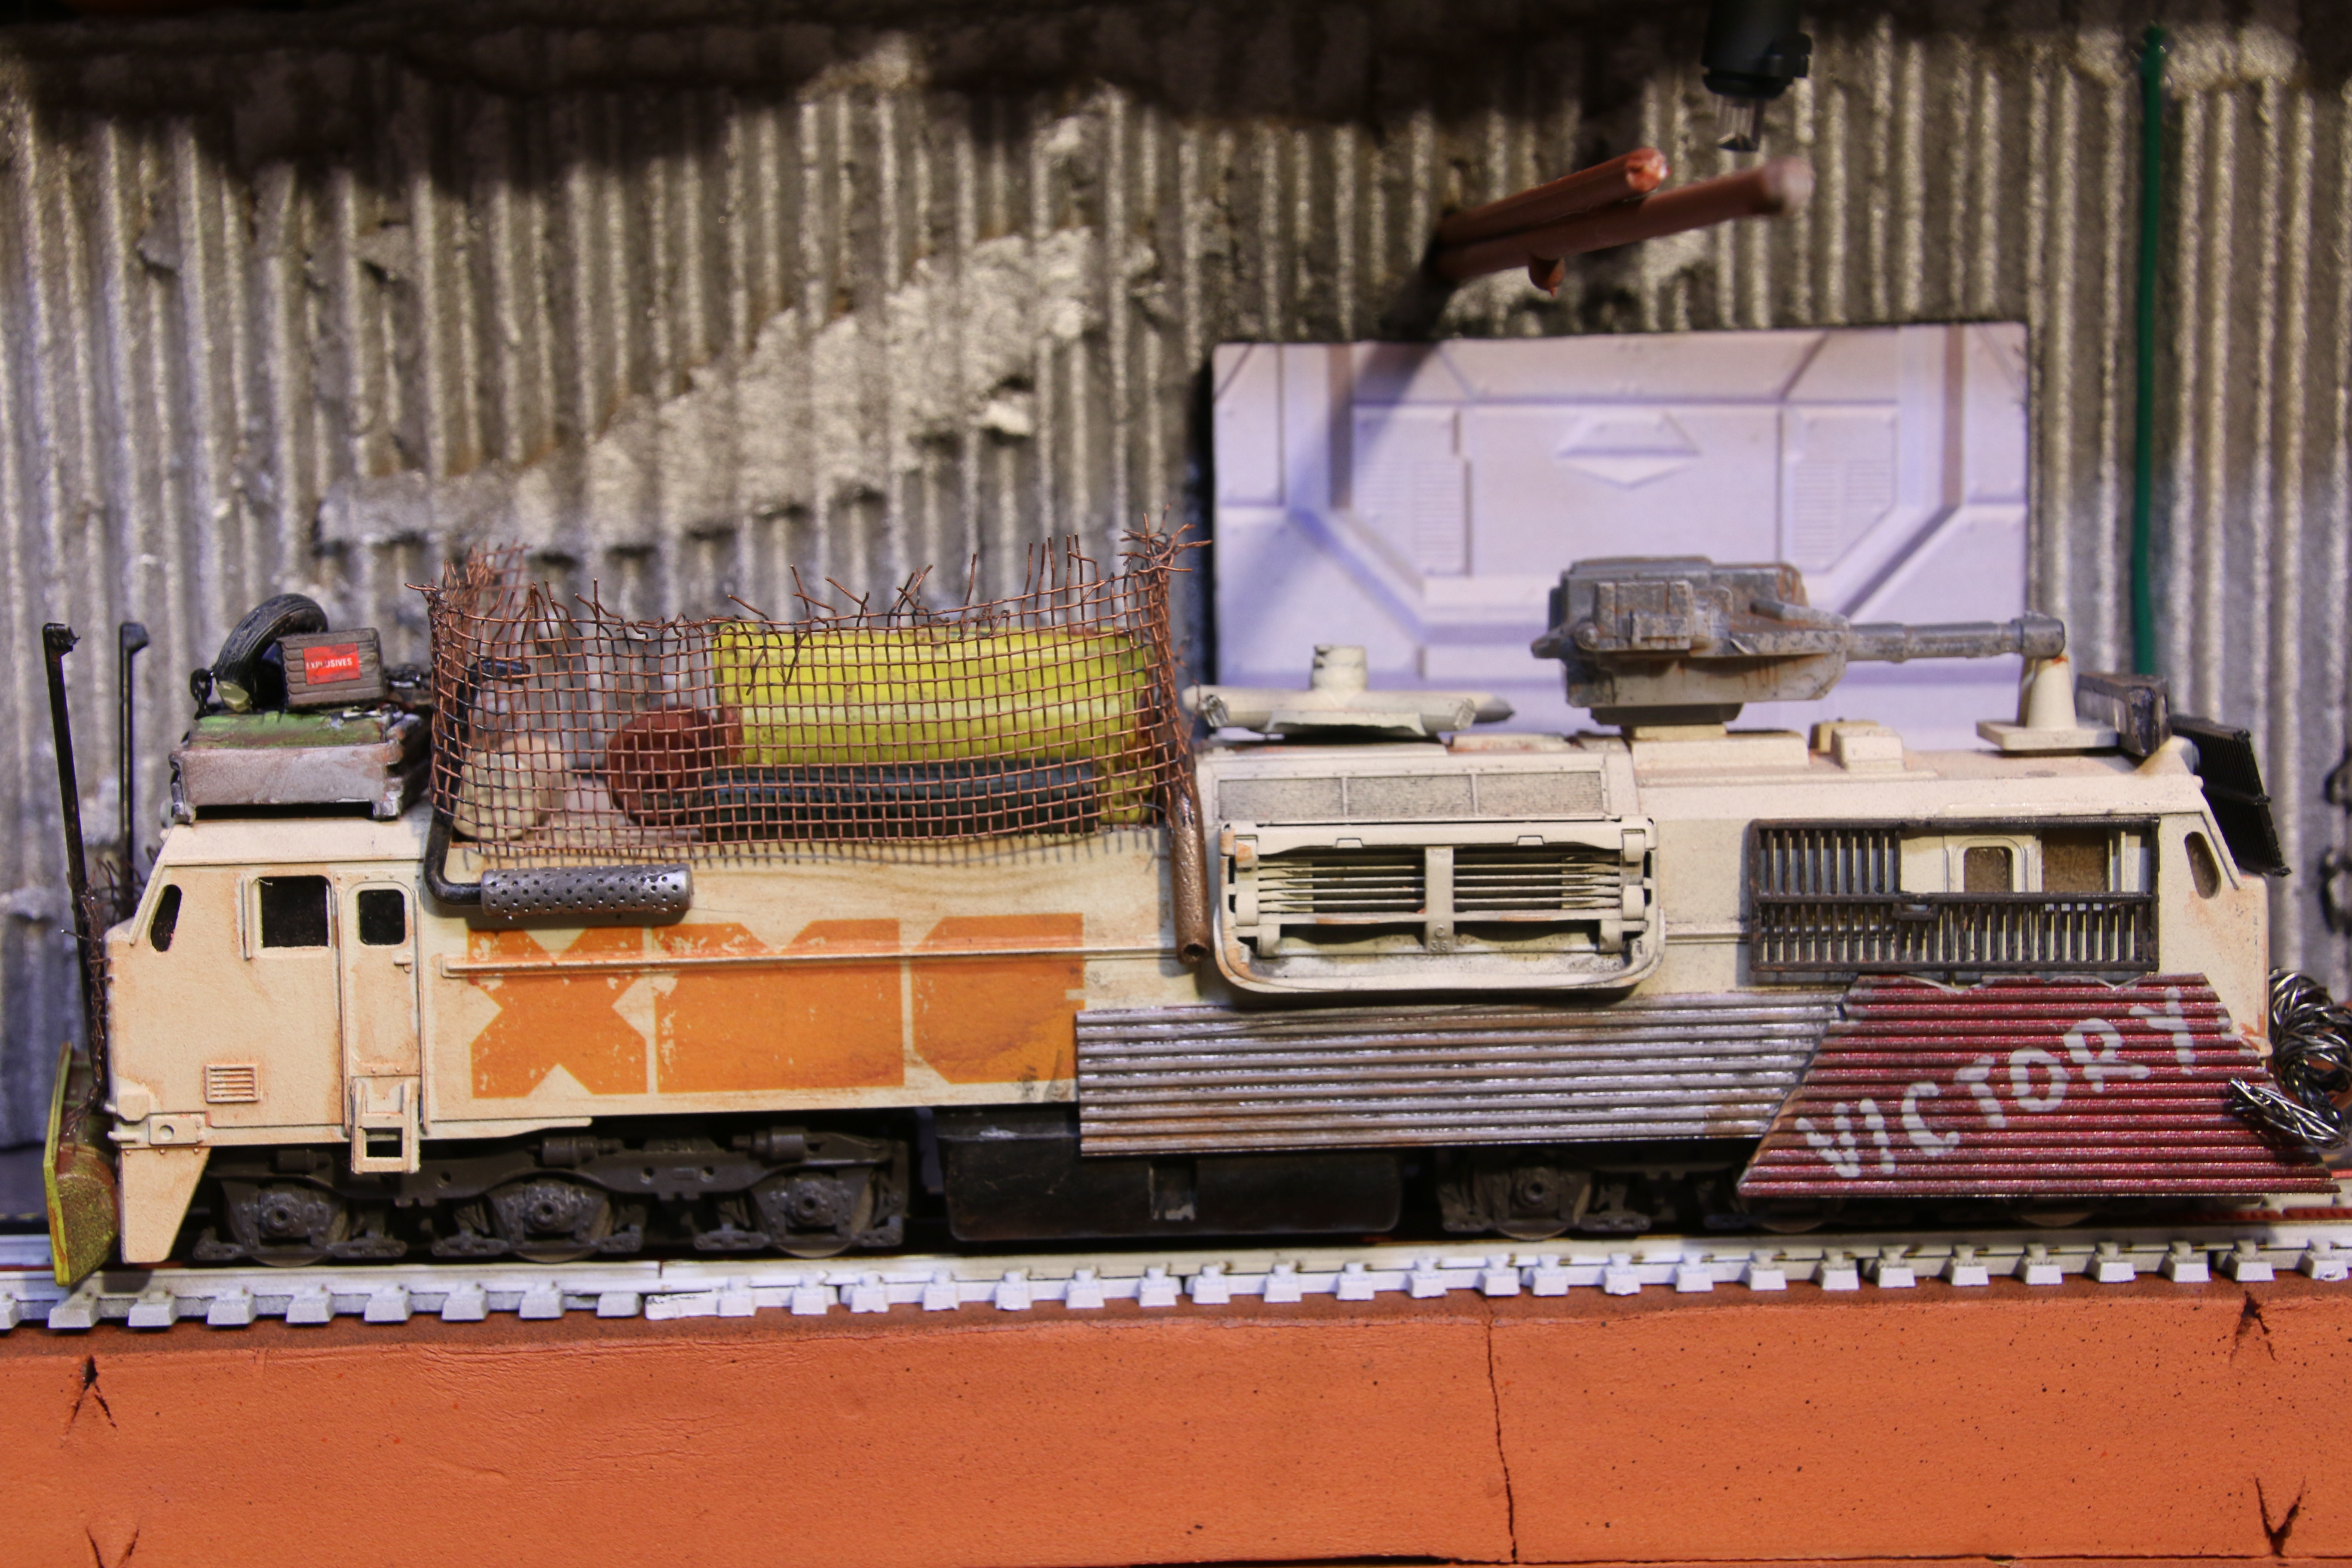 Sci-Fi model train locomotive kitbash